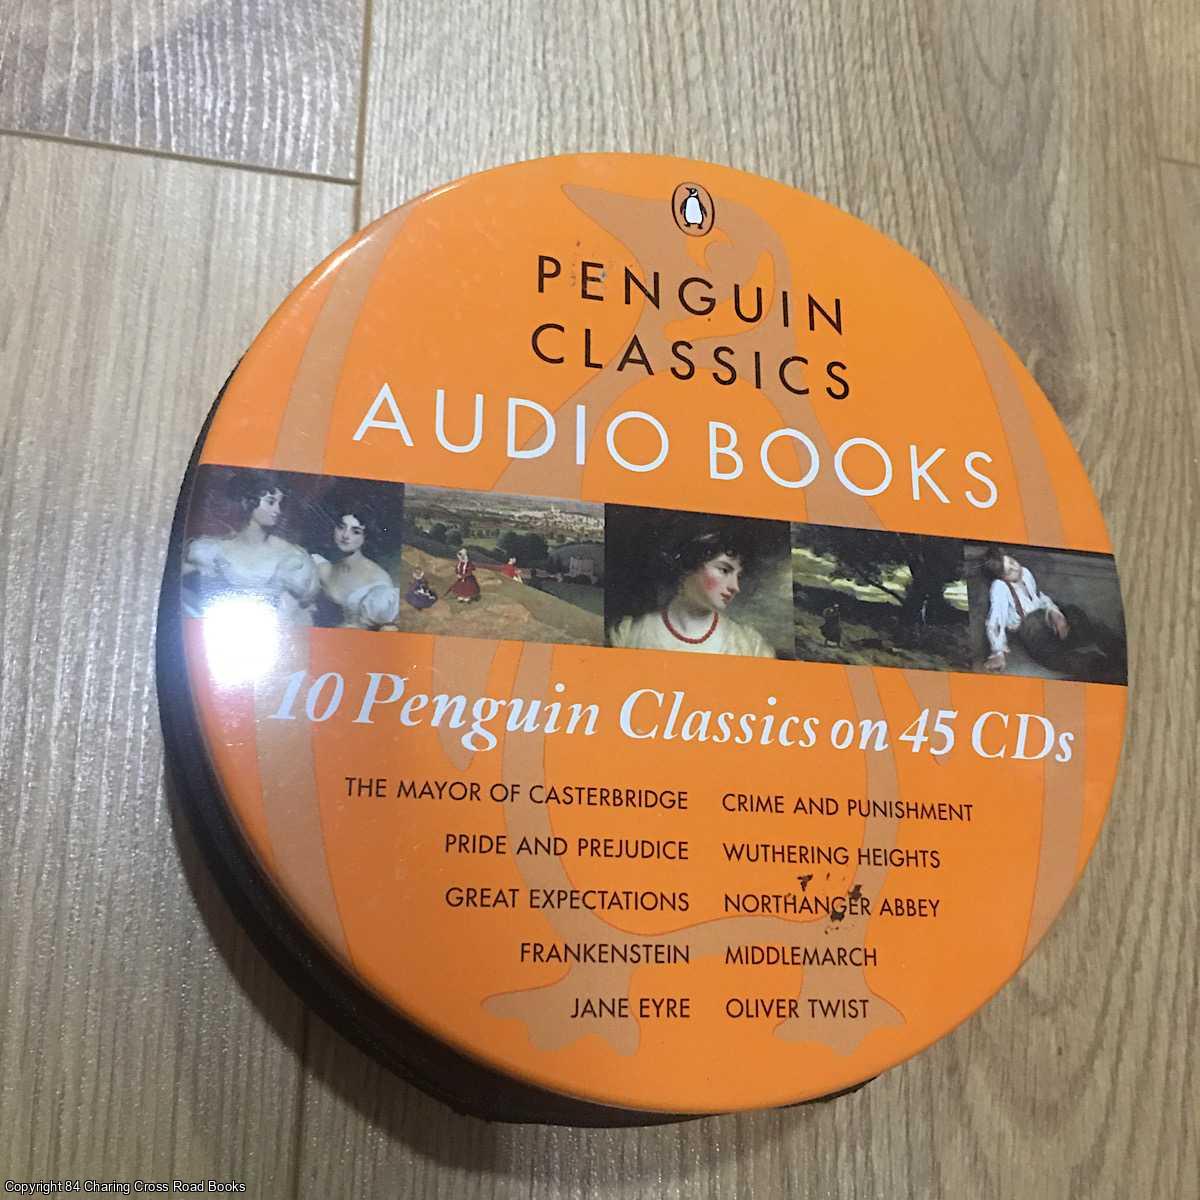  - 10 Penguin Classics on 45 CDs